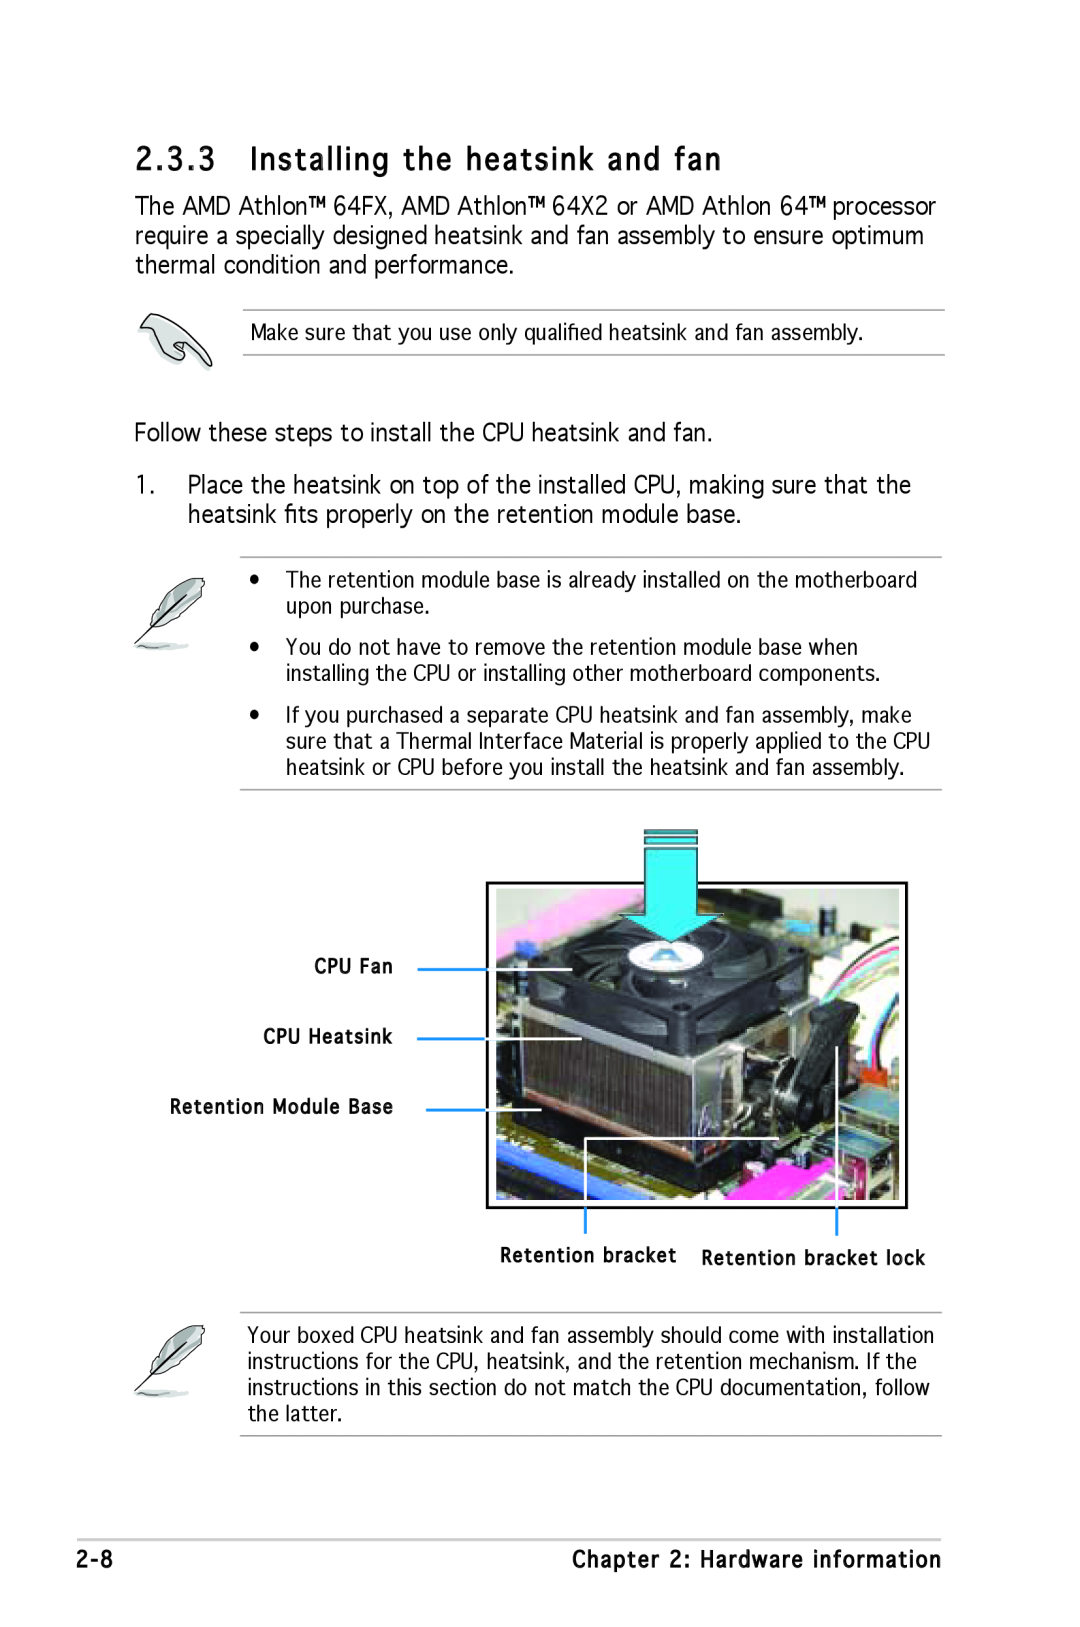 Asus A8N-SLI SE manual Installing the heatsink and fan 